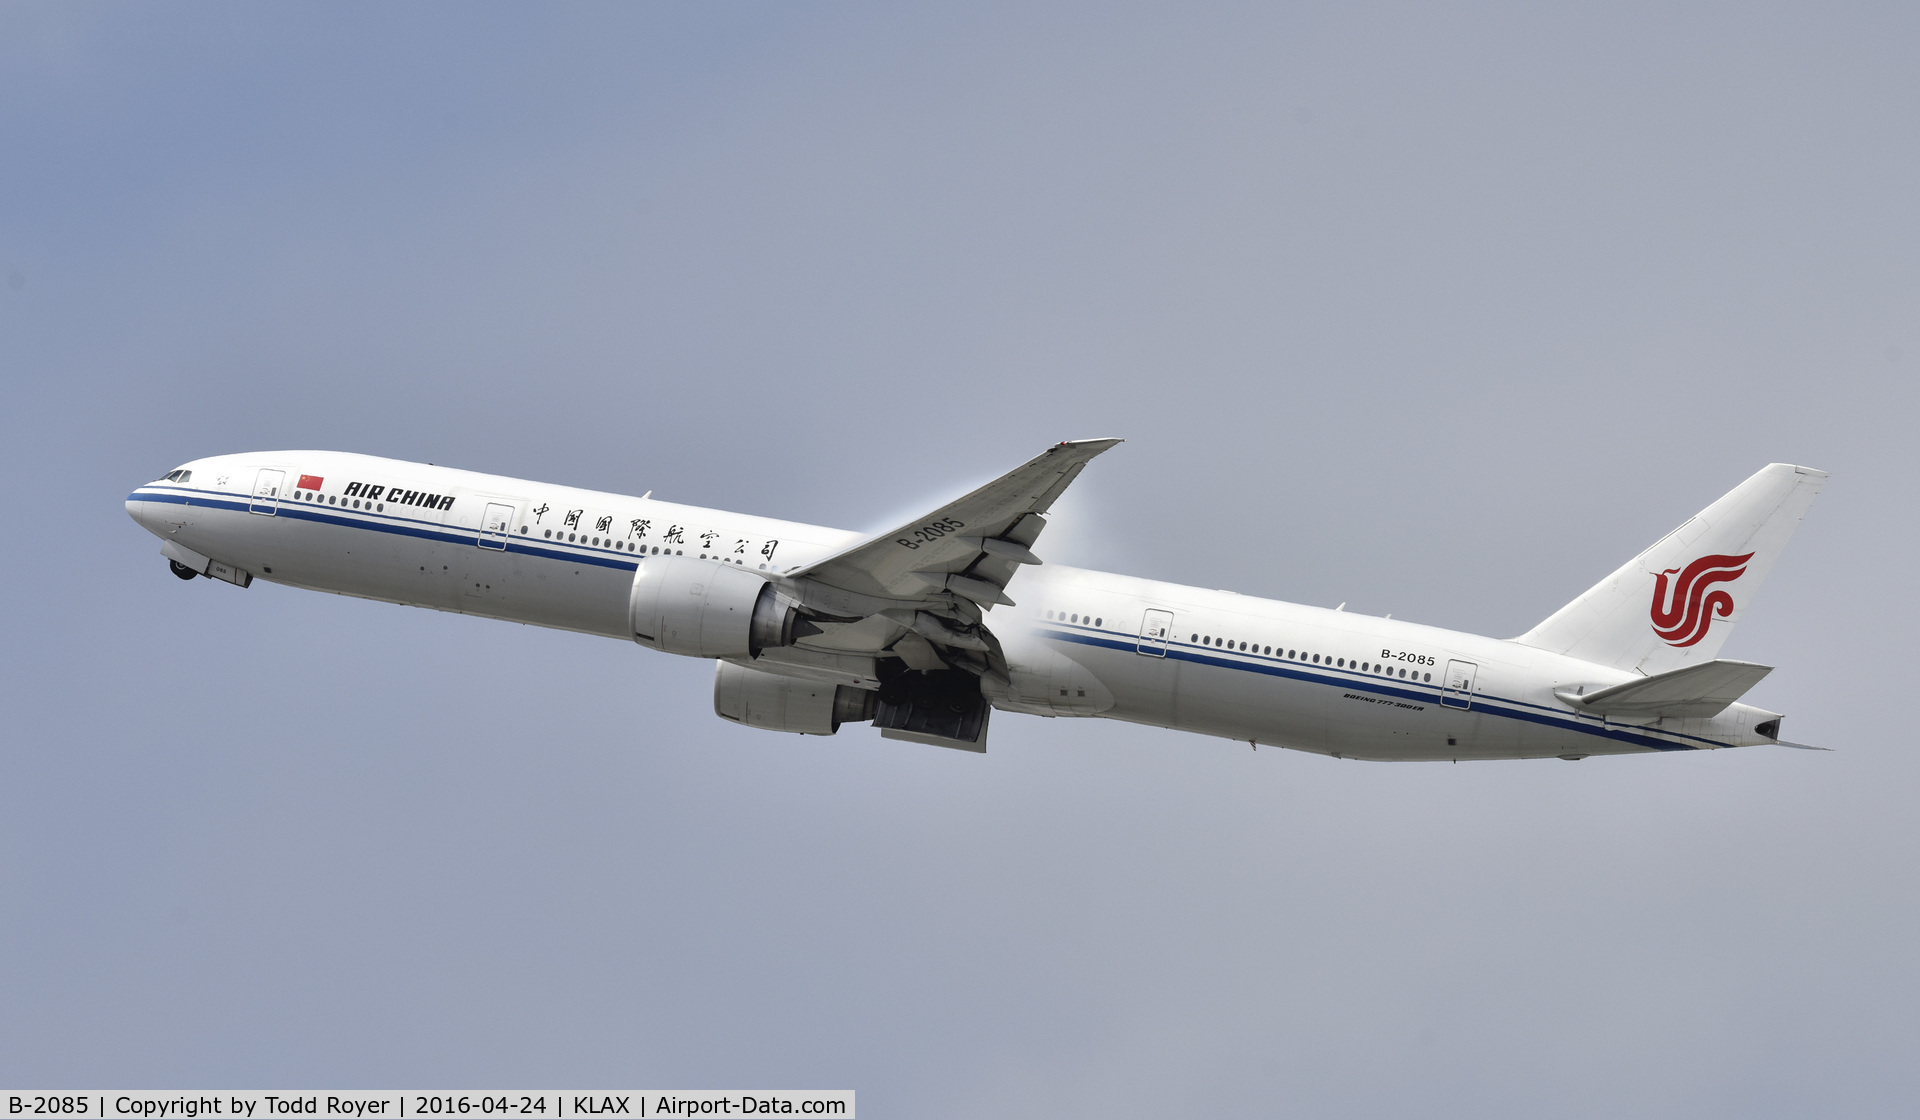 B-2085, 2011 Boeing 777-39L/ER C/N 38666, Departing LAX on 25R